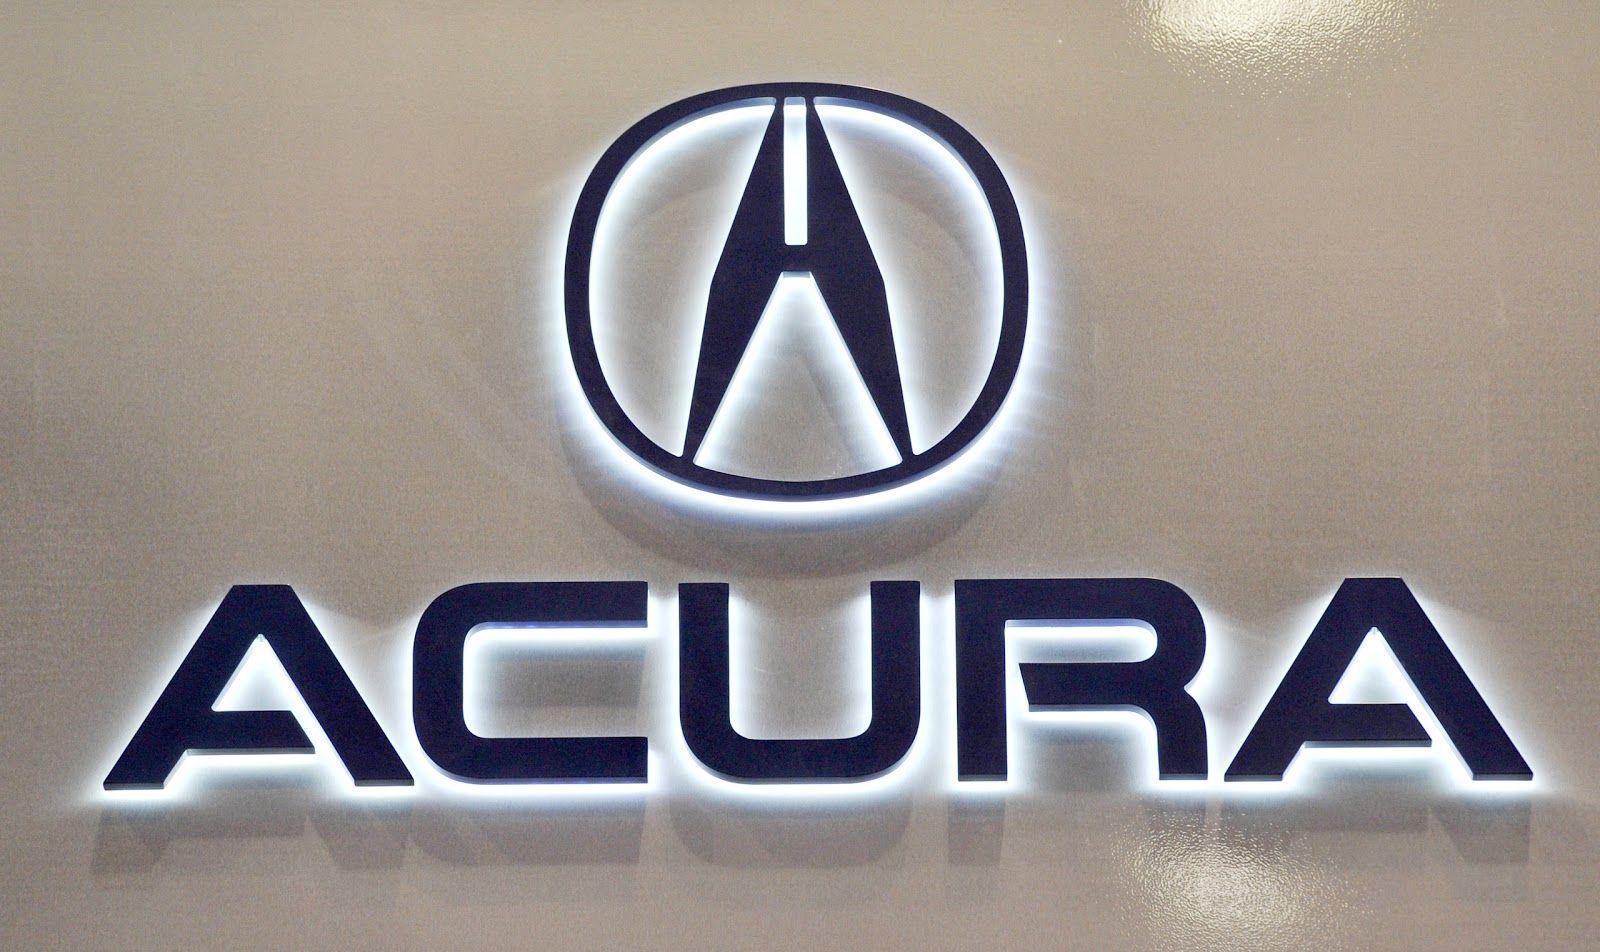 Acura Logo - Acura Logo, Acura Car Symbol Meaning and History | Car Brand Names.com